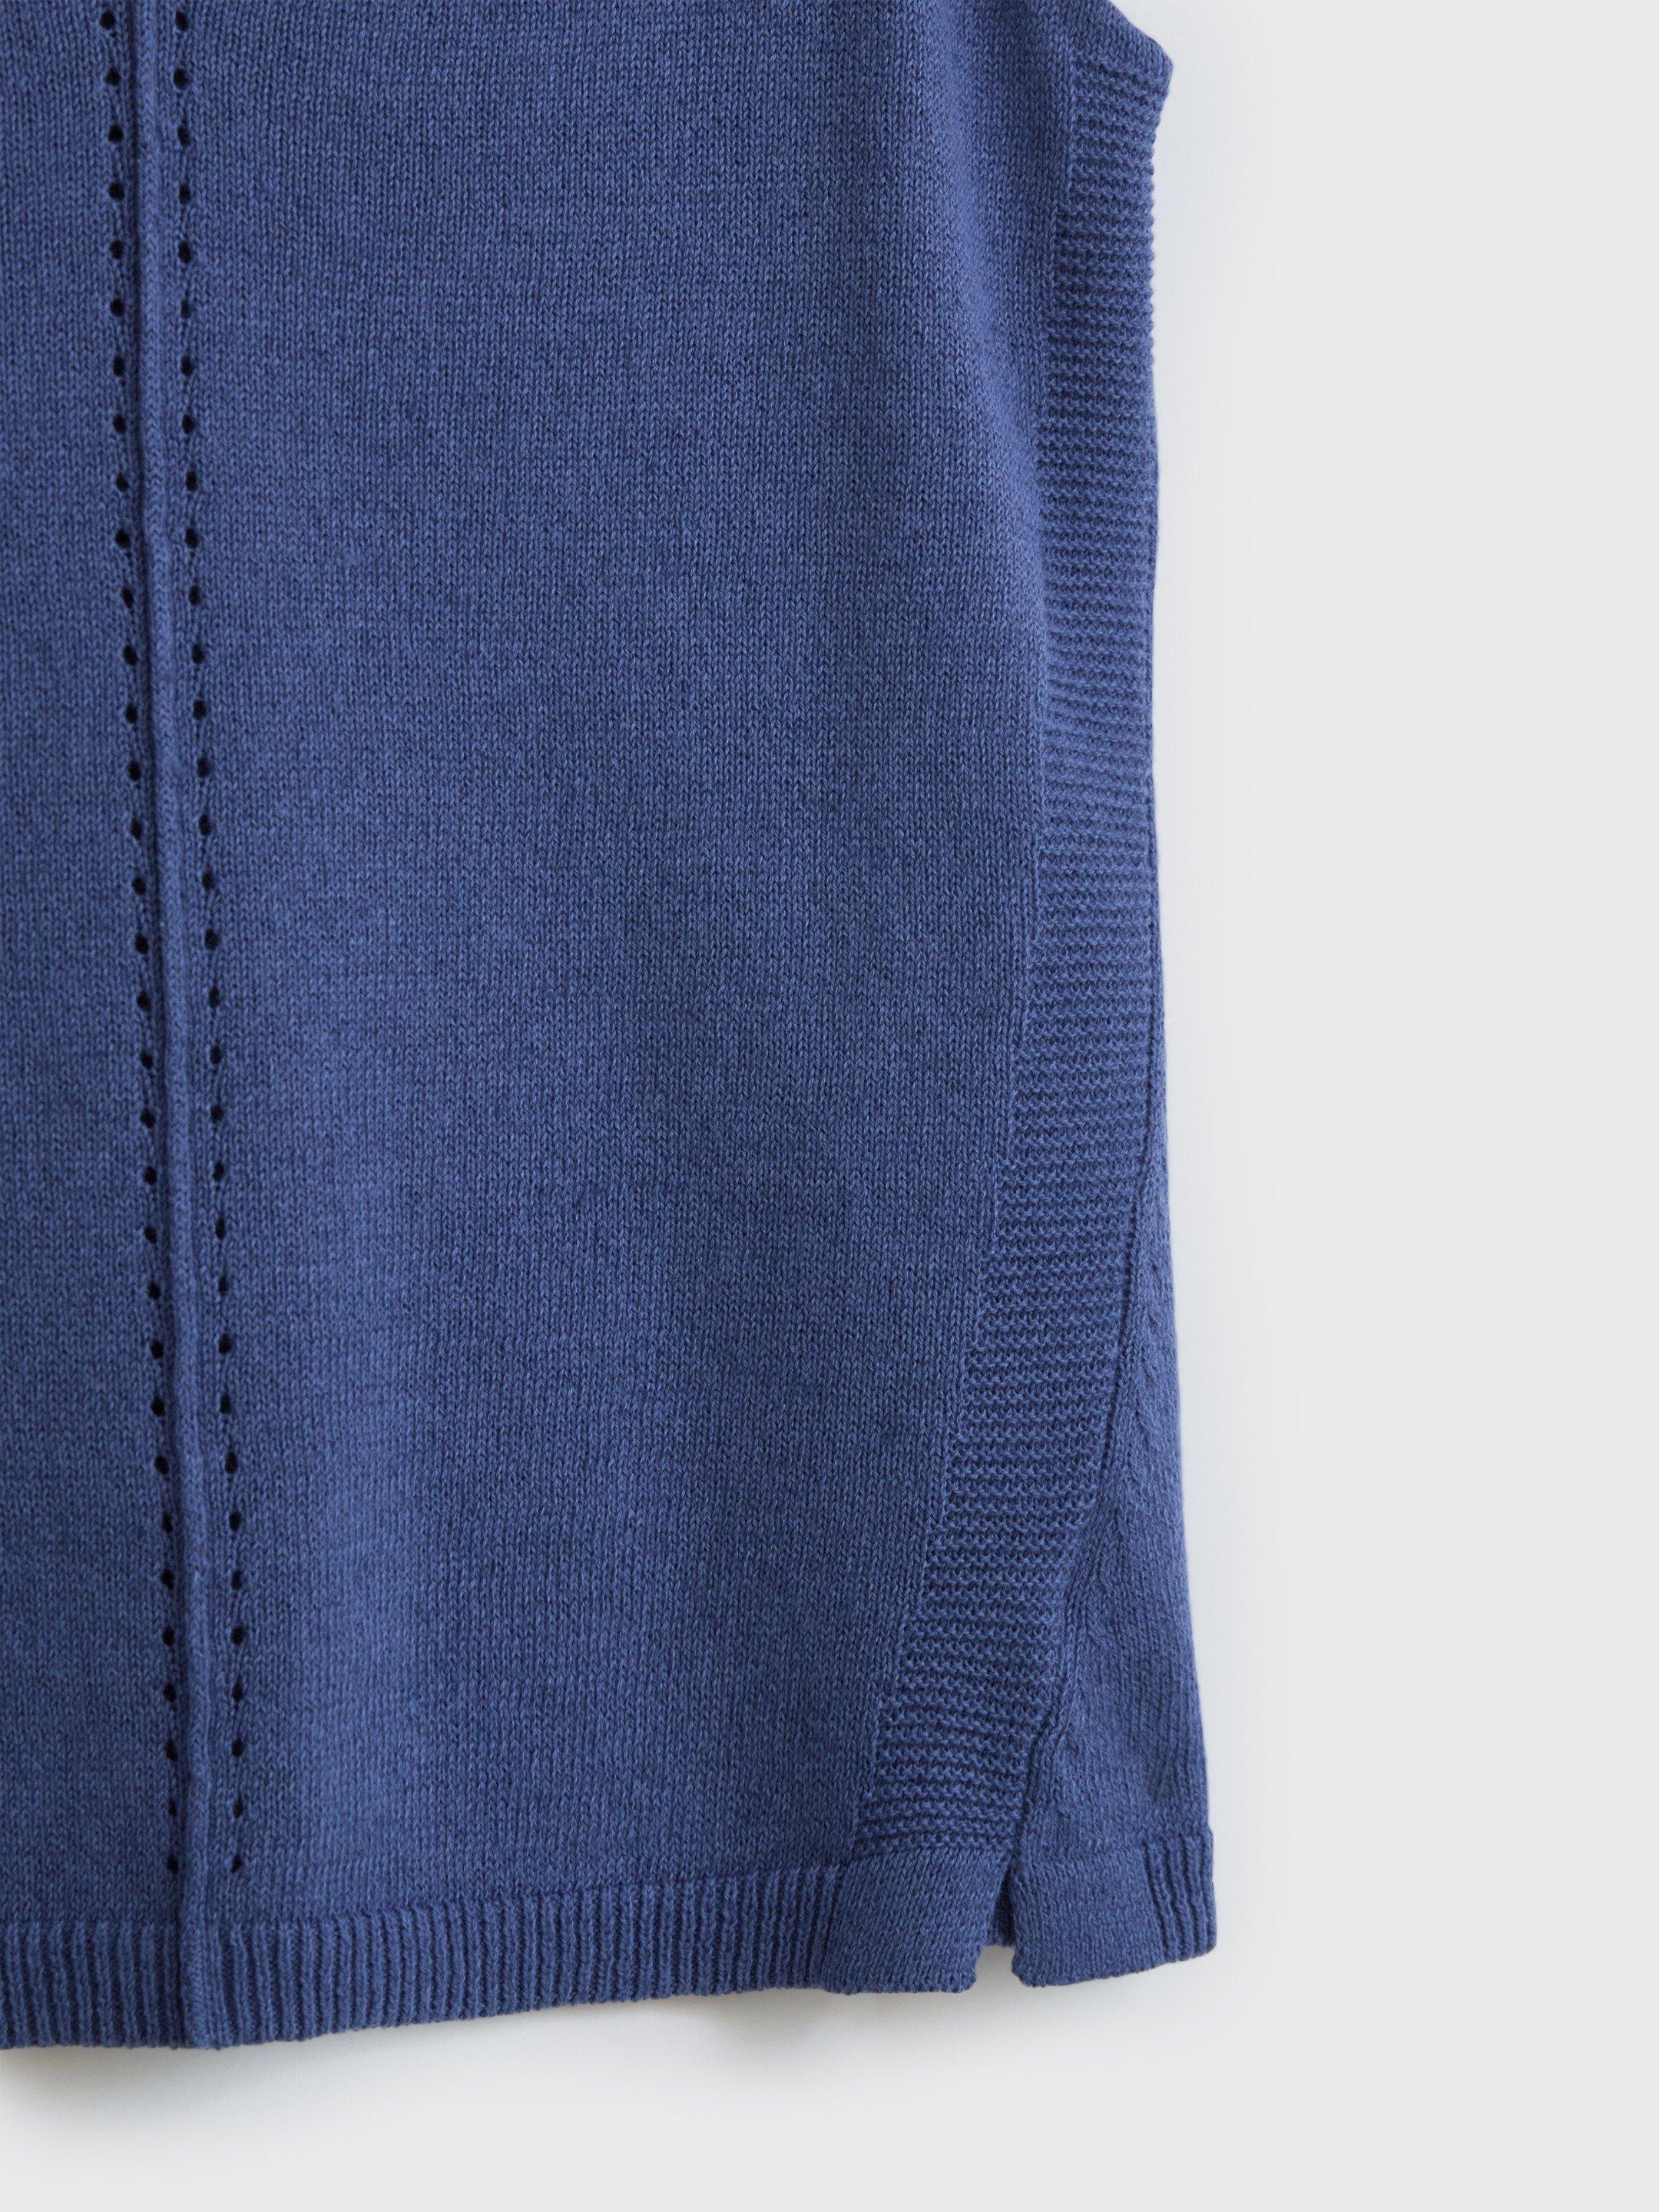 Tallulah Knit Vest in MID BLUE - FLAT DETAIL